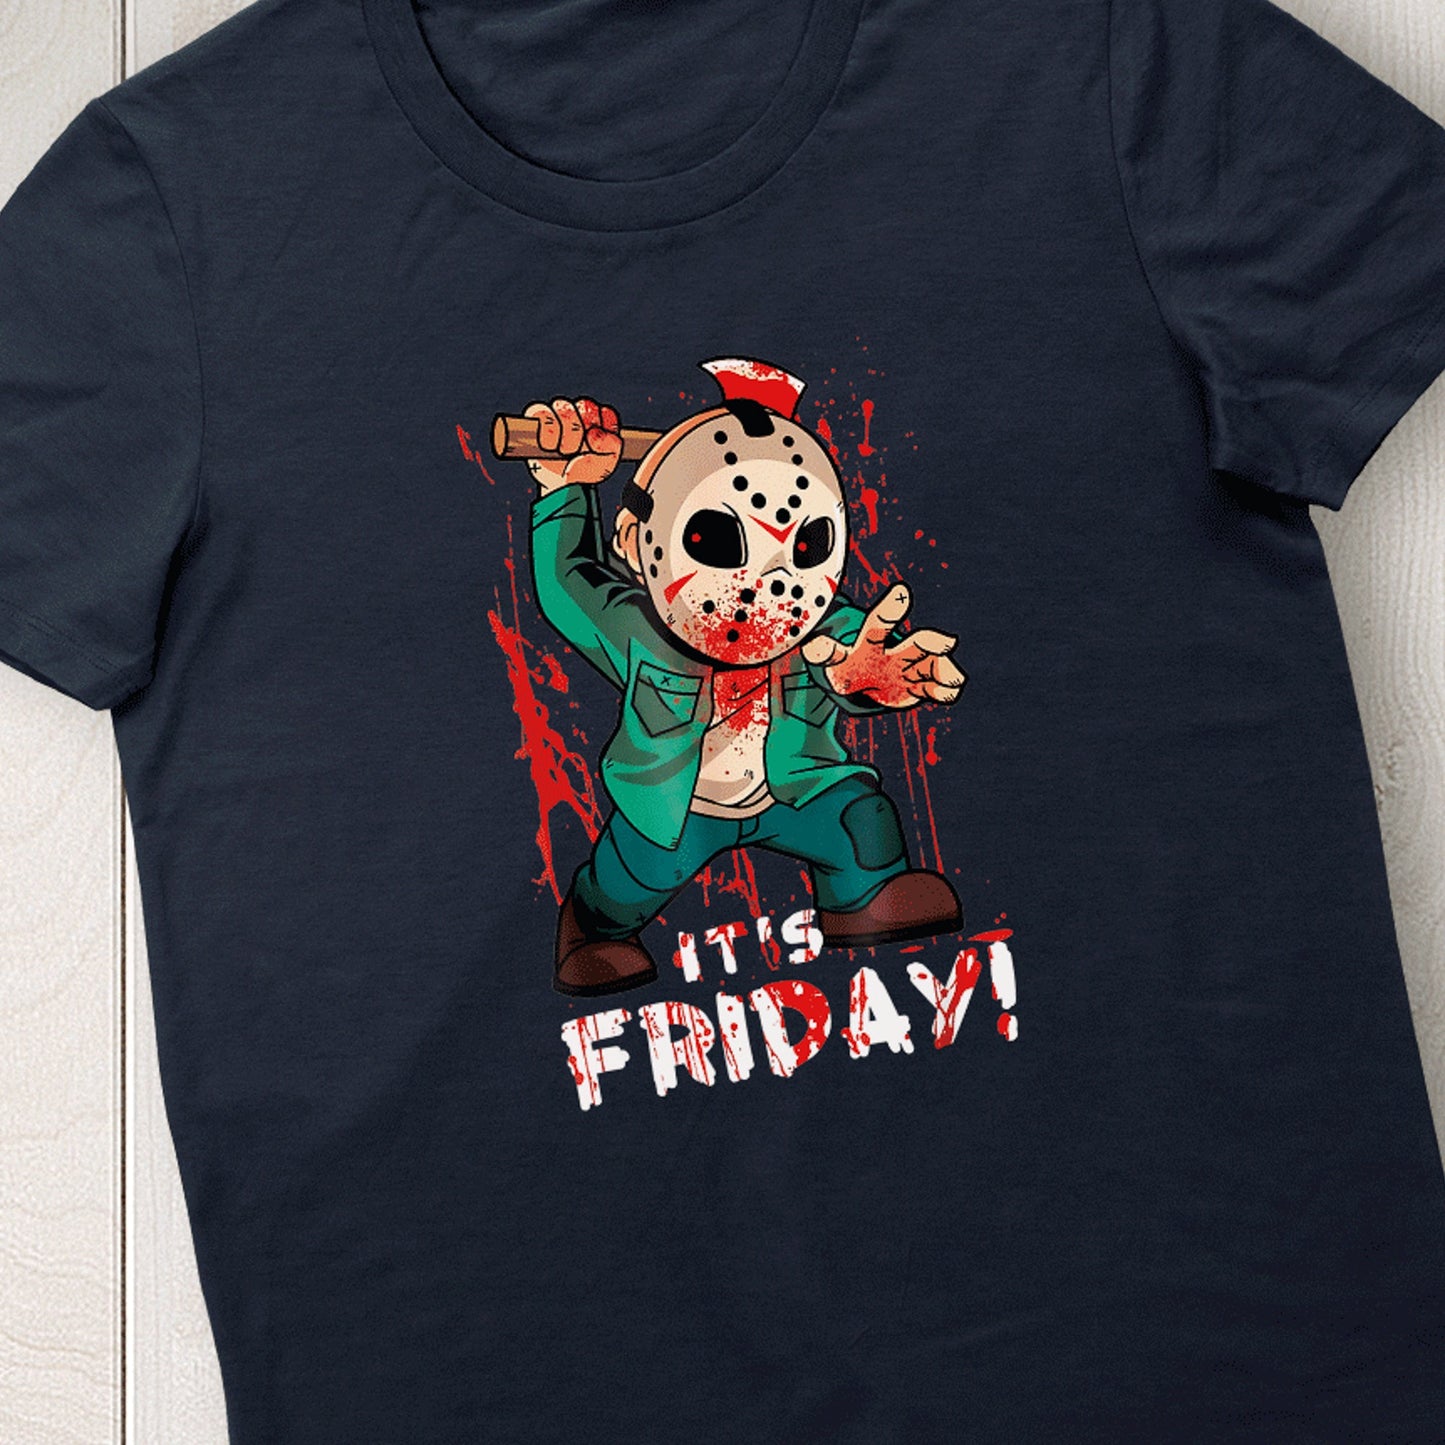 Scare Friday Tshirt Kids